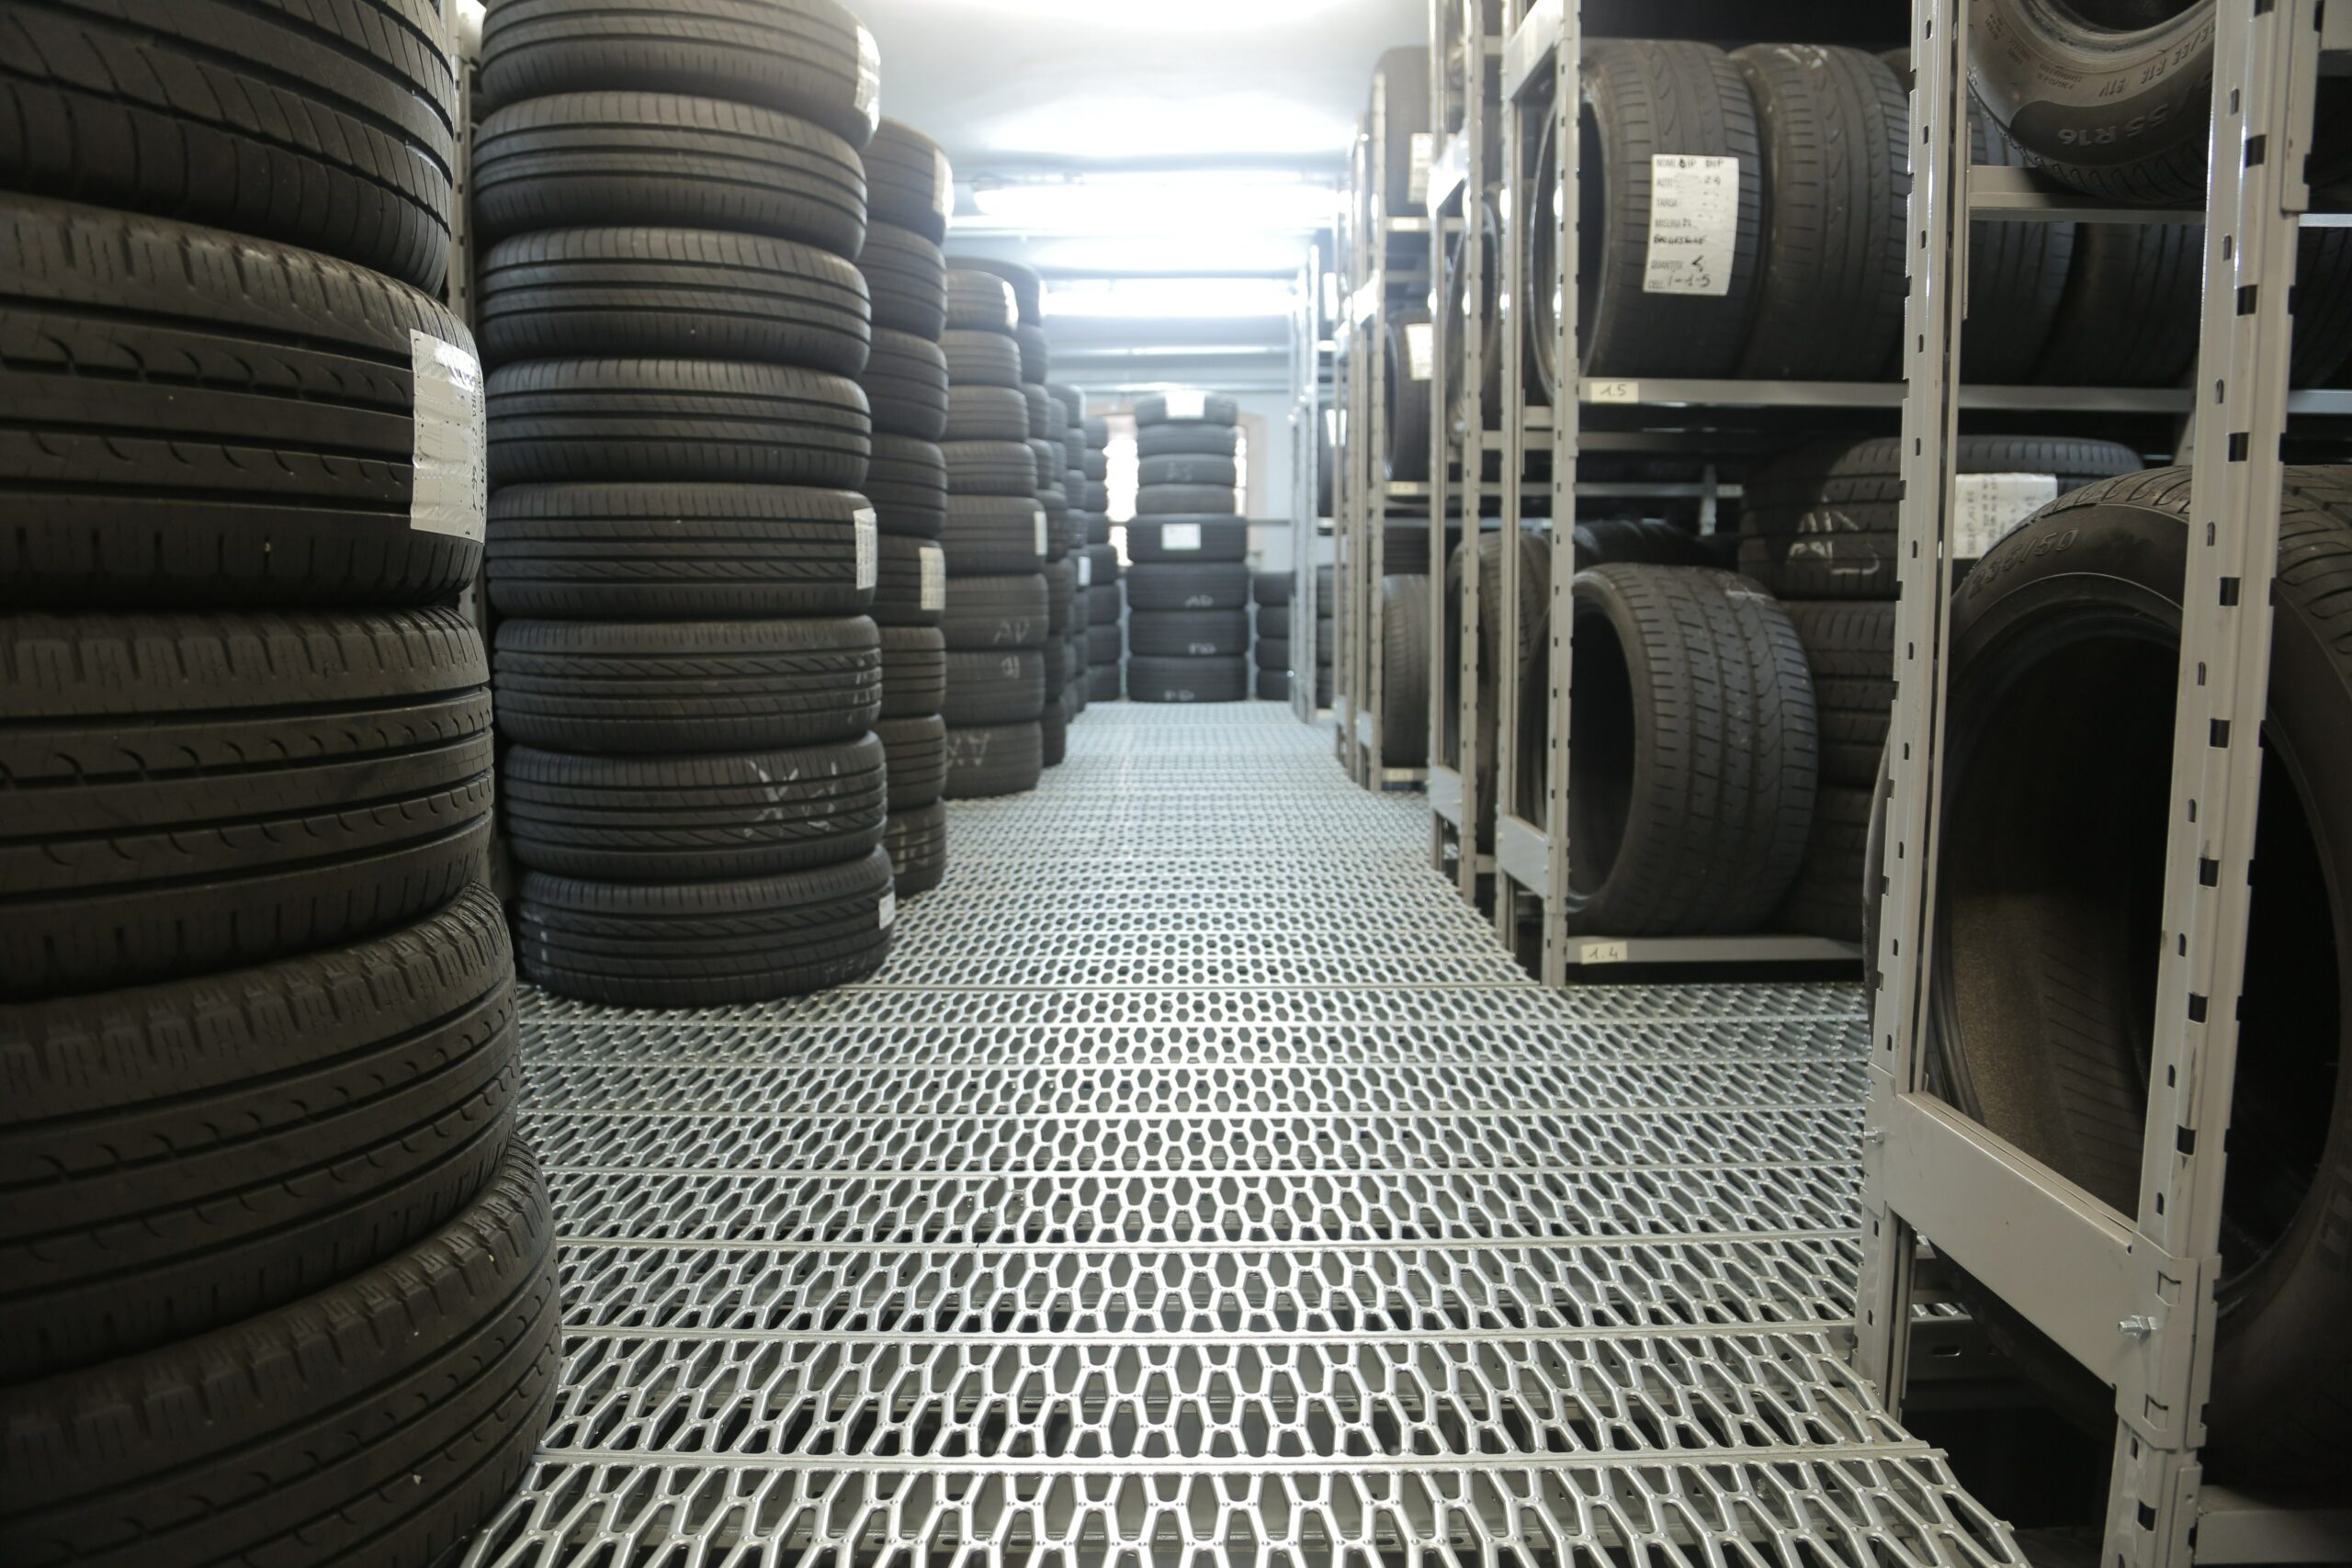 173,000 Goodyear Tires Recalled